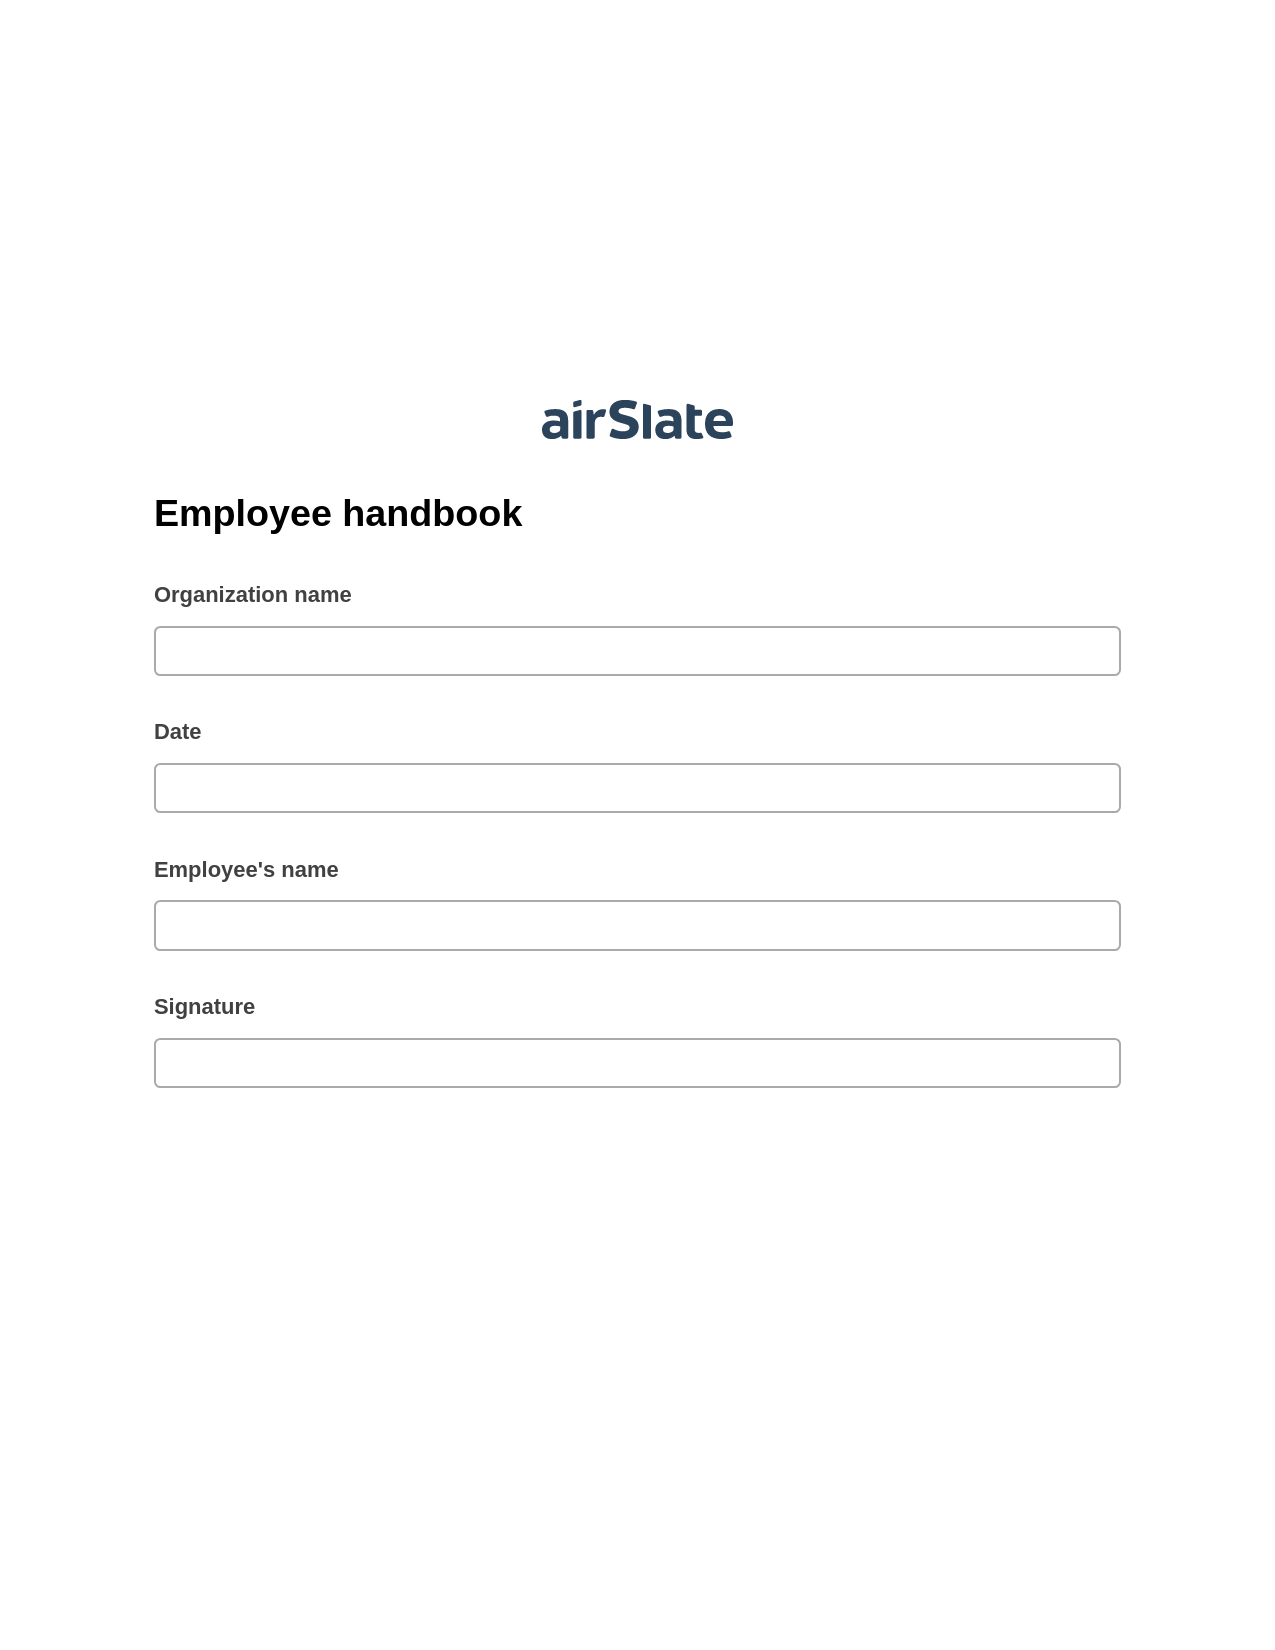 Employee handbook Pre-fill from Excel Spreadsheet Bot, Send Mailchimp Campaign Bot, OneDrive Bot